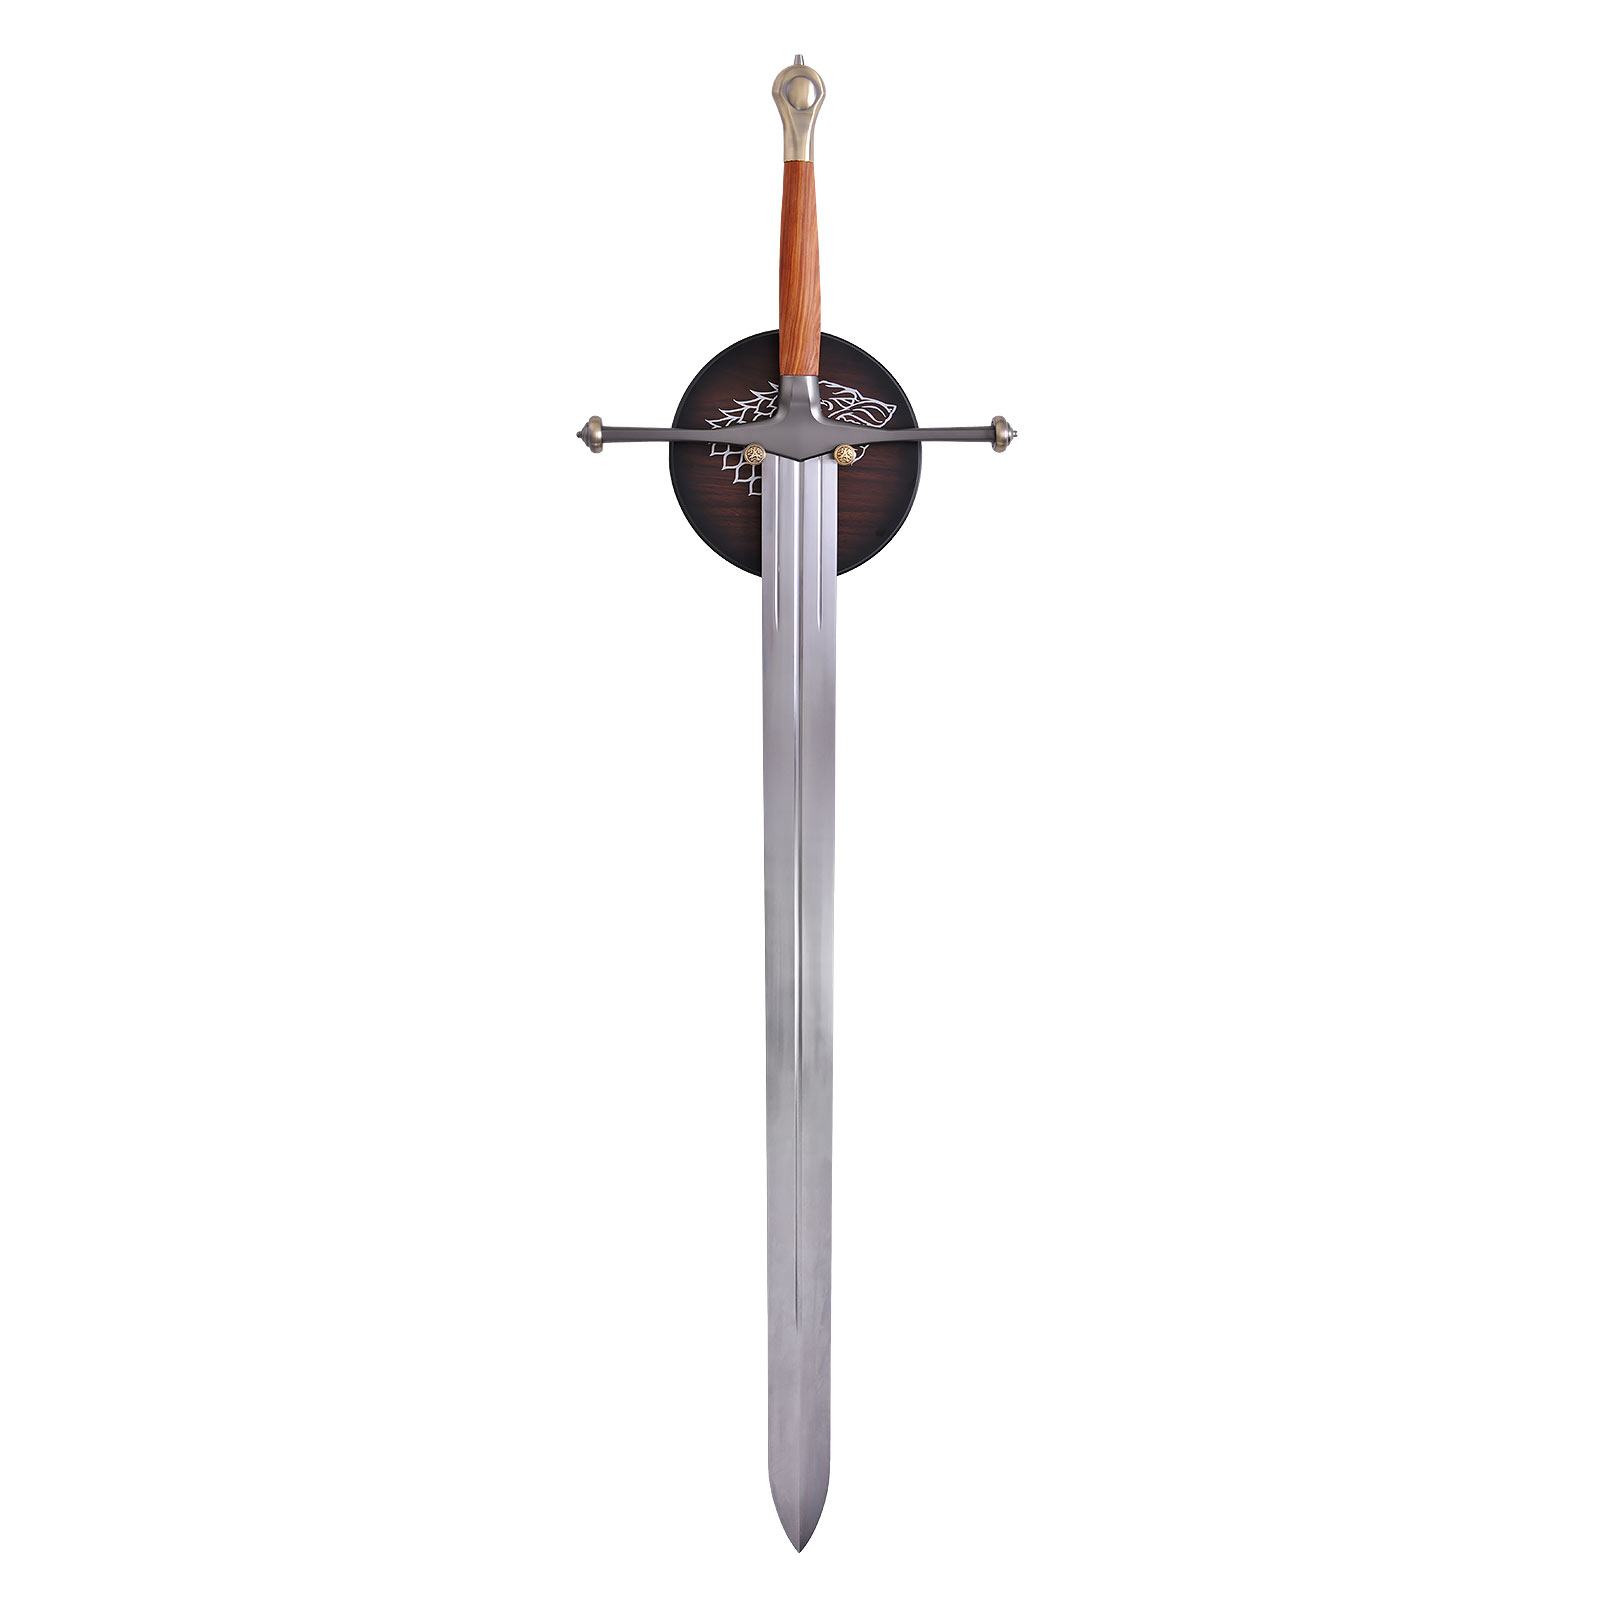 Game of Thrones - Eddard Stark's sword Ice